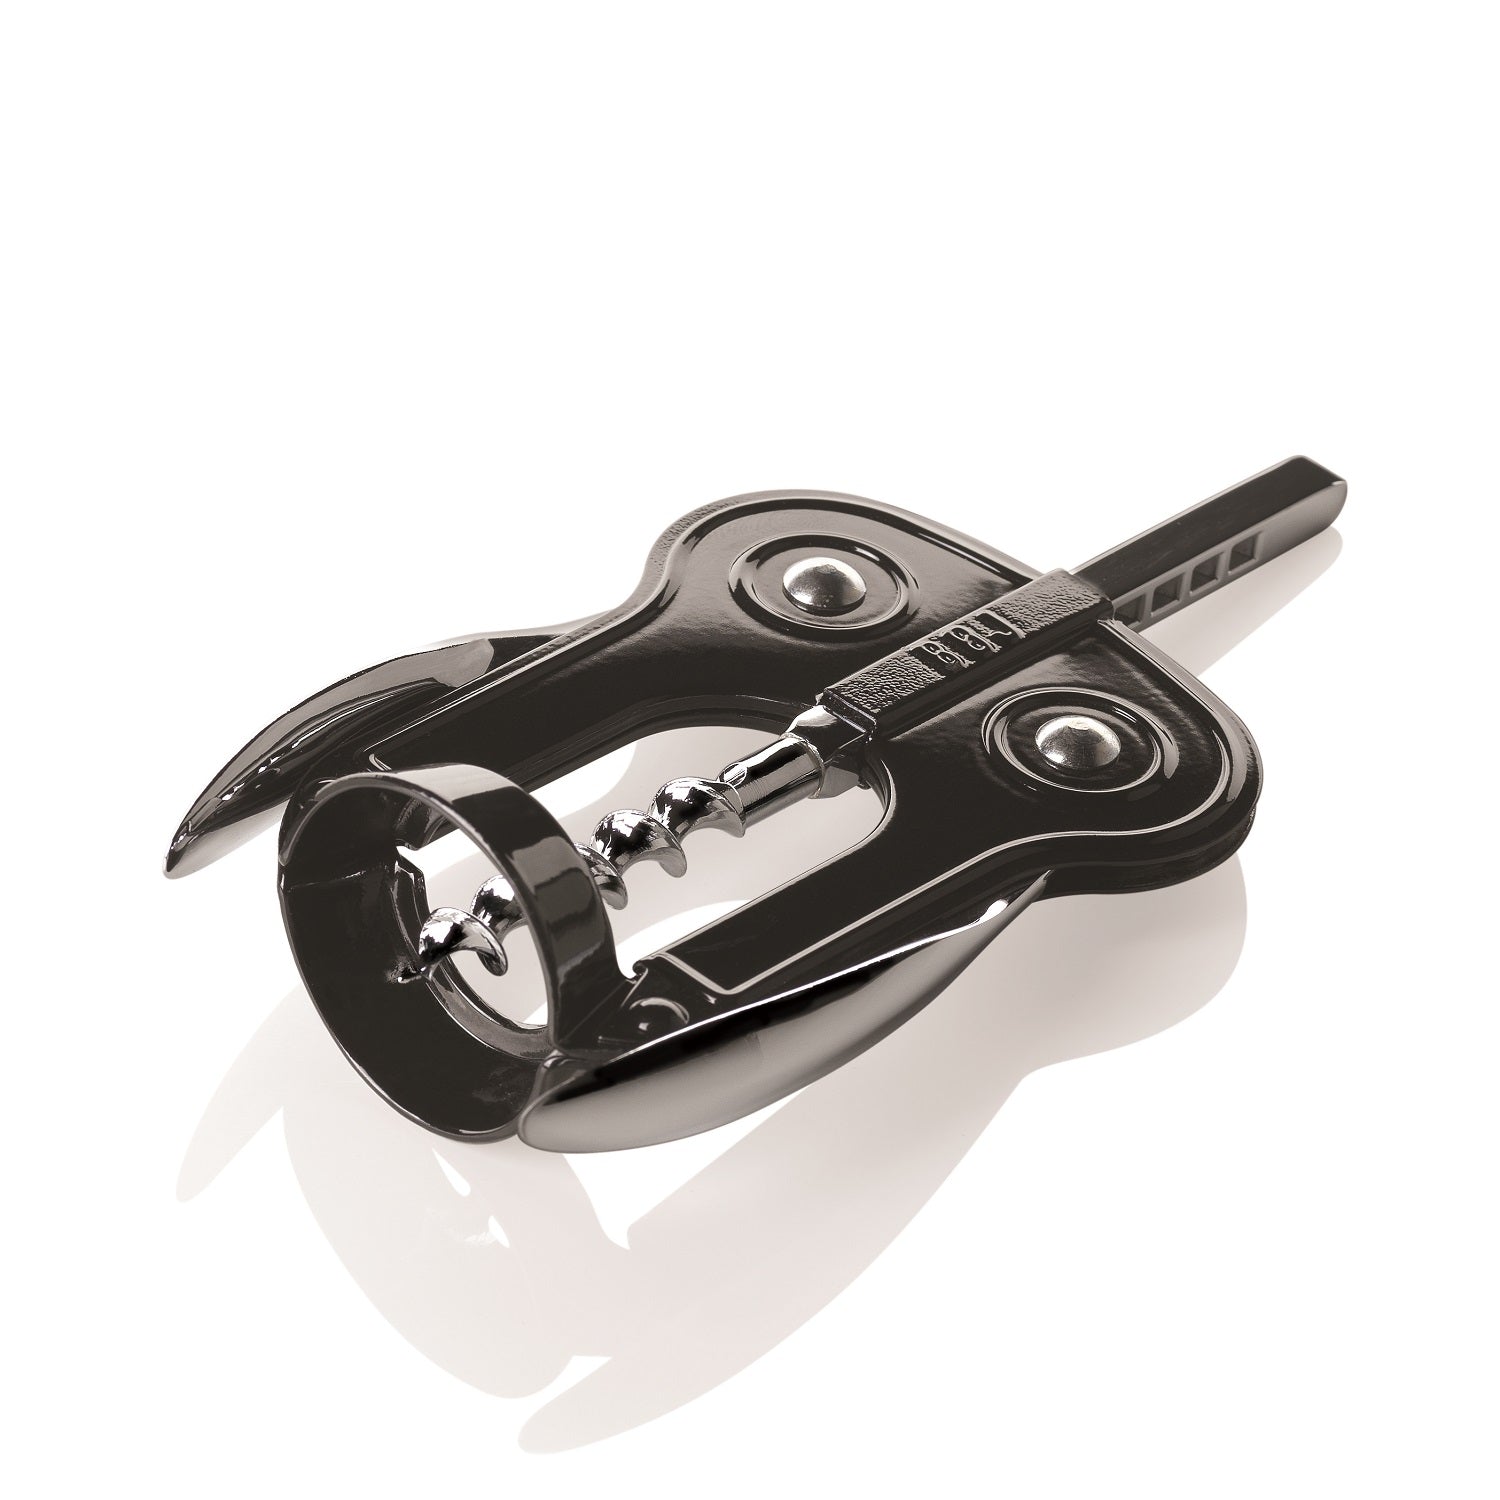 BOJ LUX "Owl Style" Double Lever Wing Corkscrew Wine Opener (Handheld)